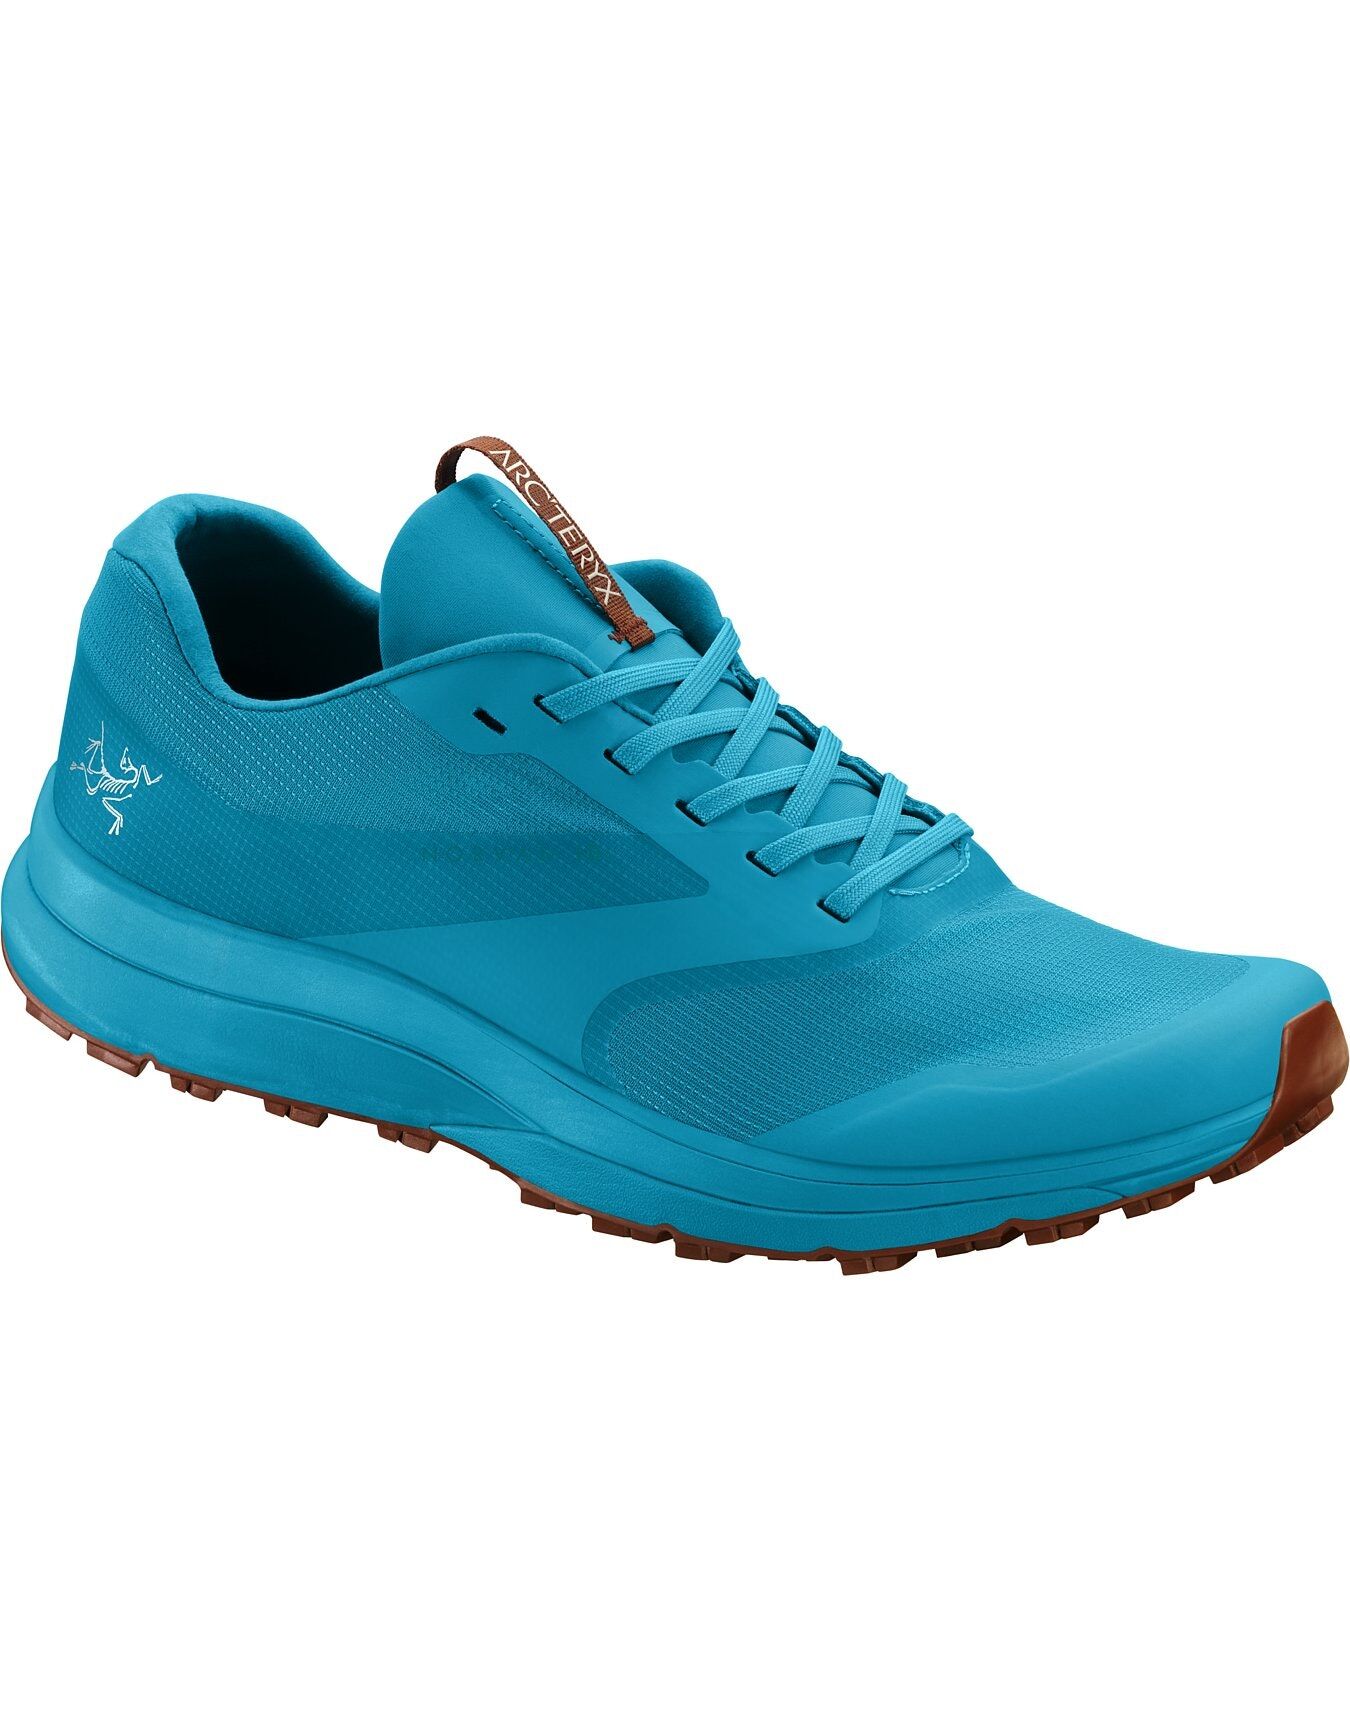 Arc'teryx Norvan LD - Trail running shoes - Men's